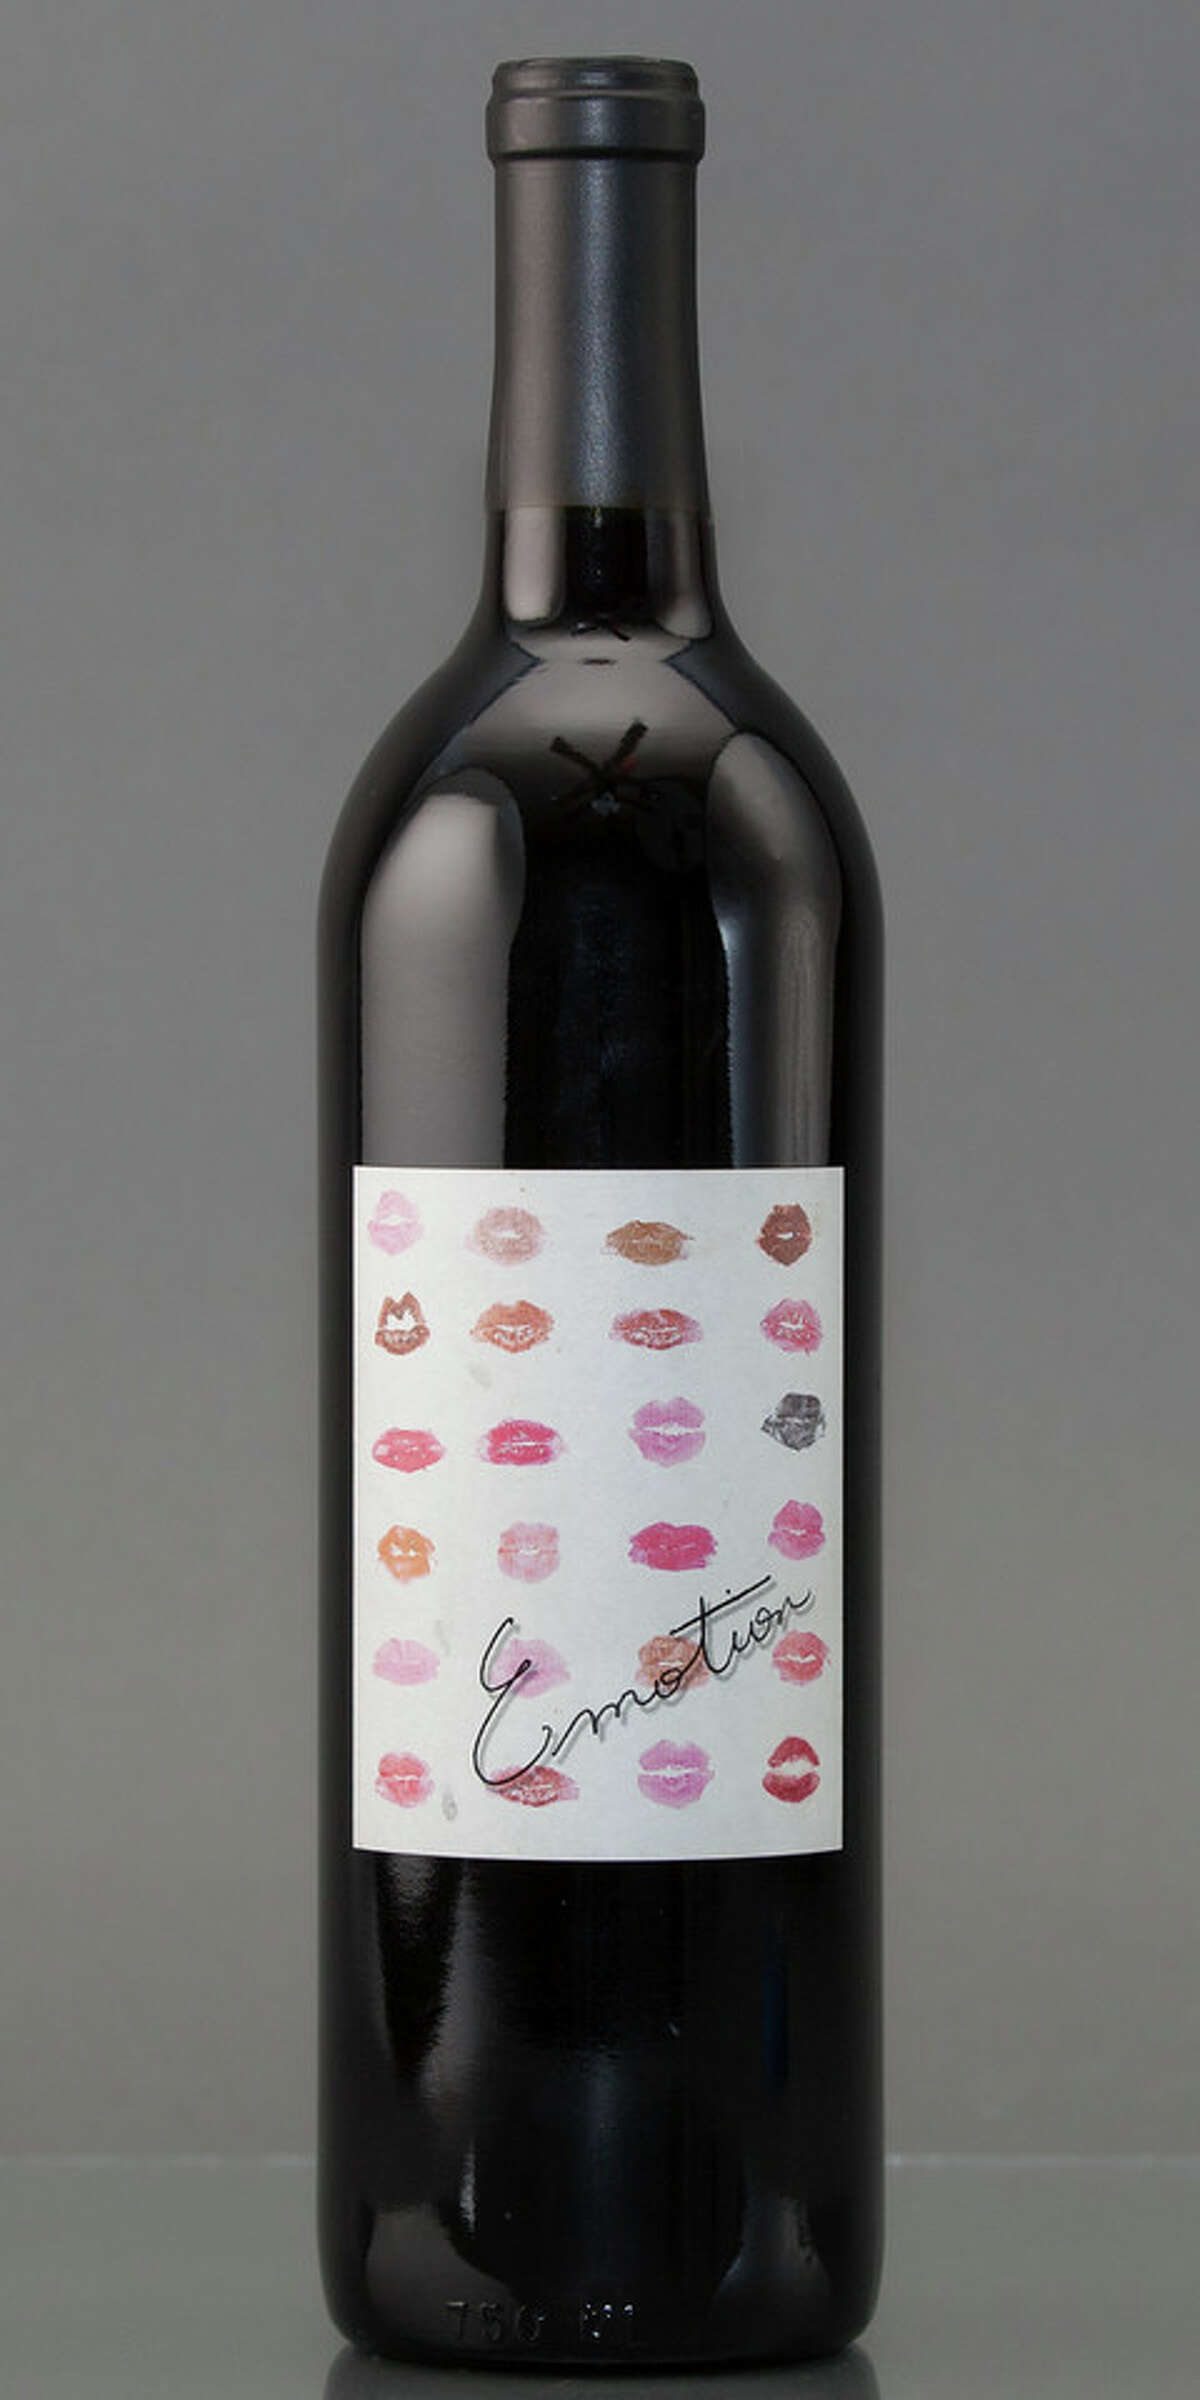 A bottle from Creek Winery.